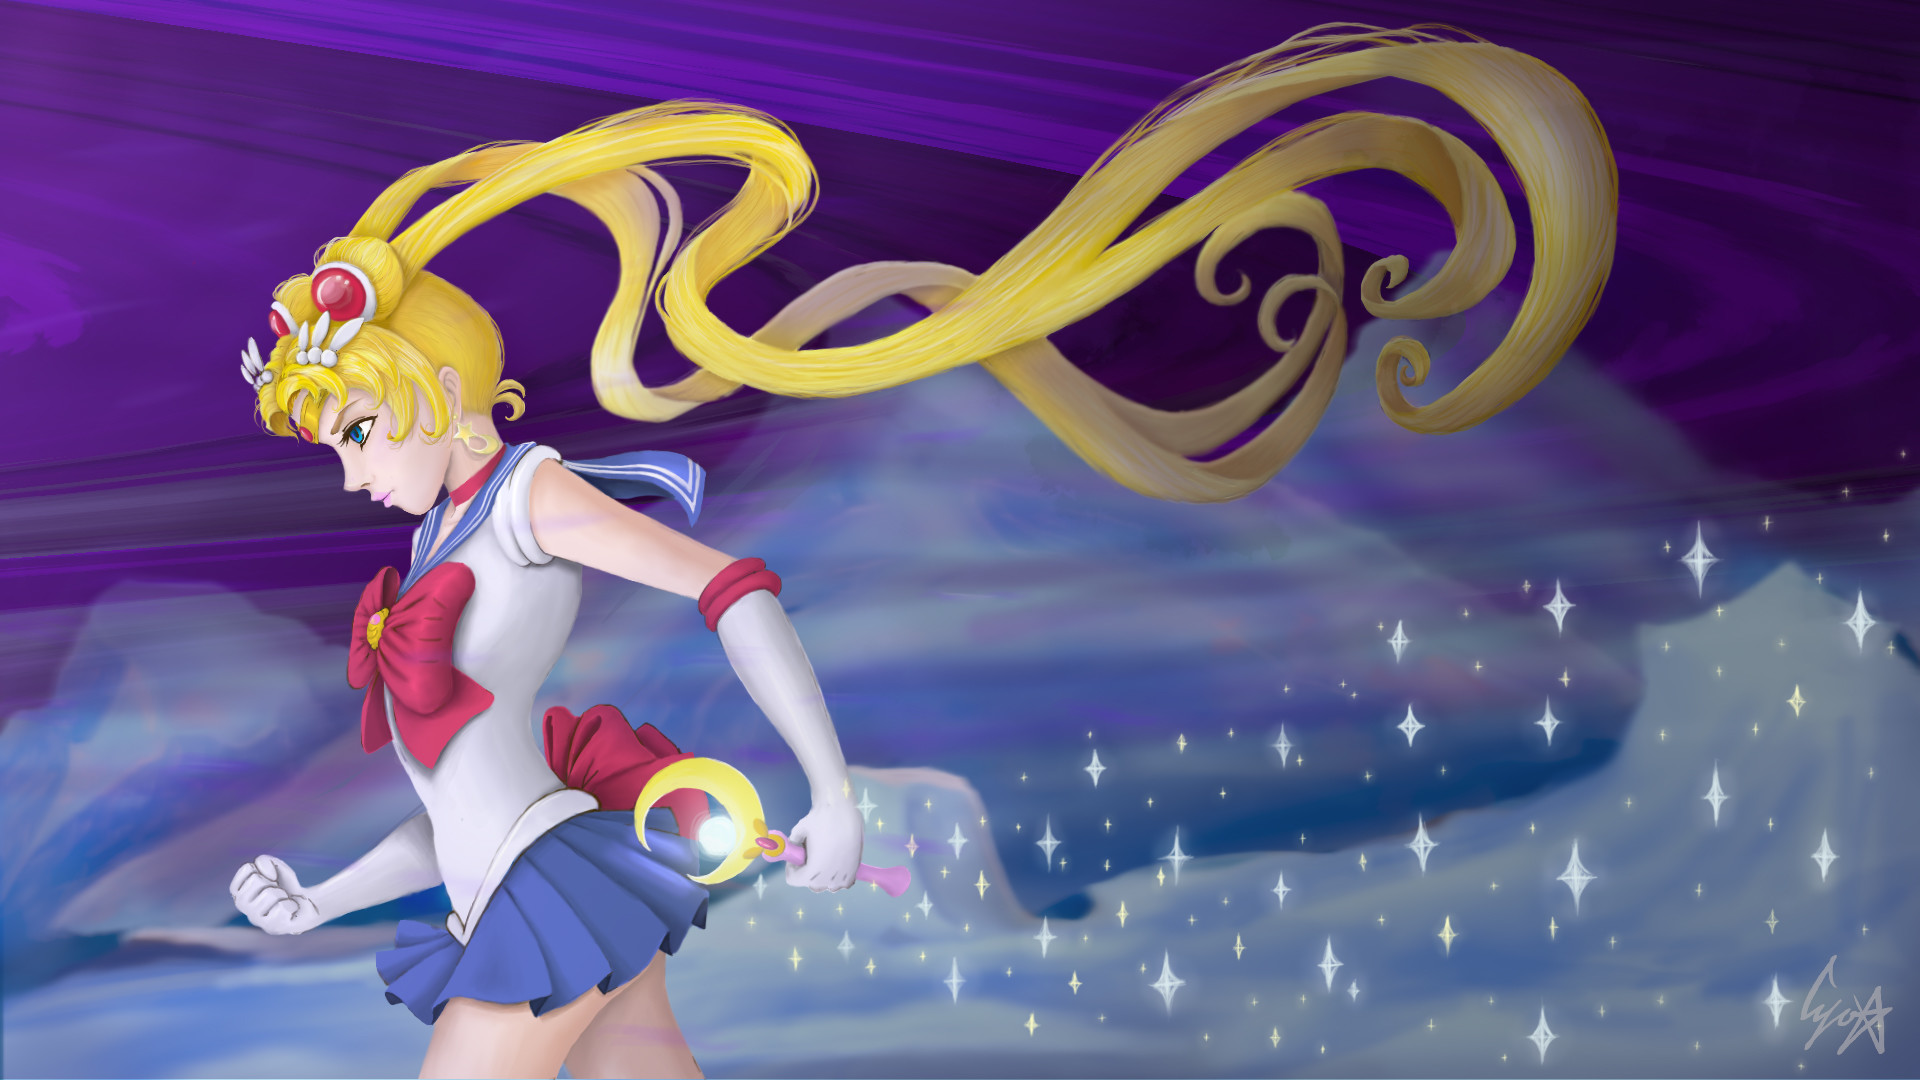 ArtStation - Eternal Sailor moon fanart